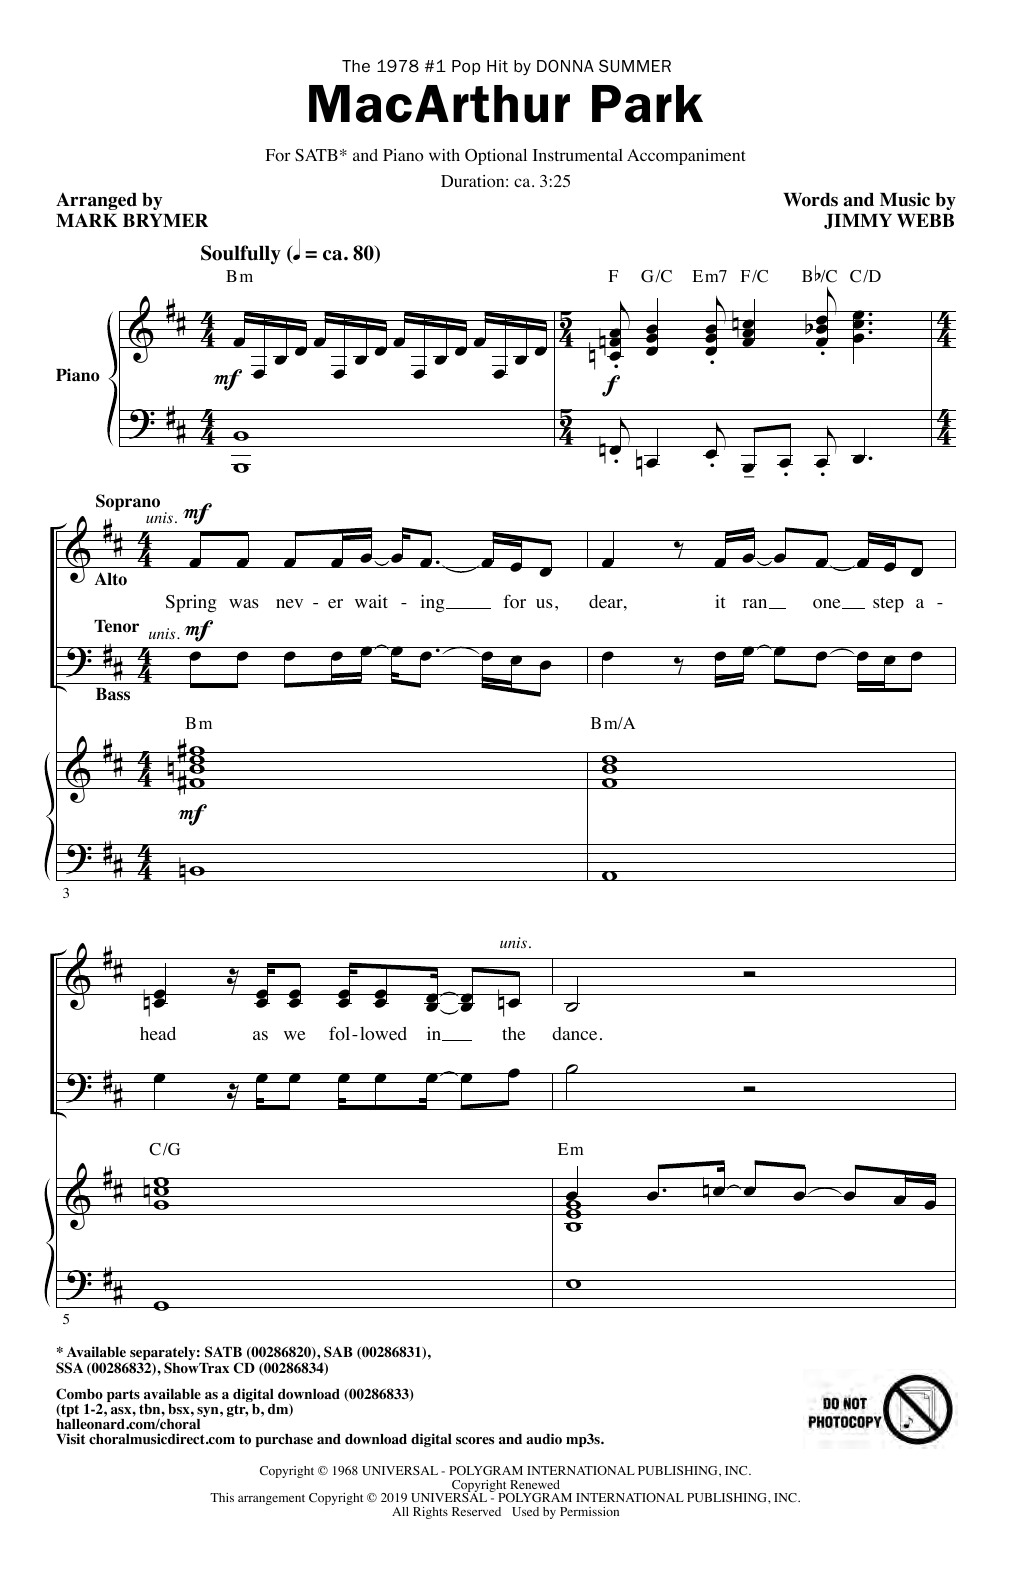 Donna Summer MacArthur Park (arr. Mark Brymer) Sheet Music Notes & Chords for SSA Choir - Download or Print PDF